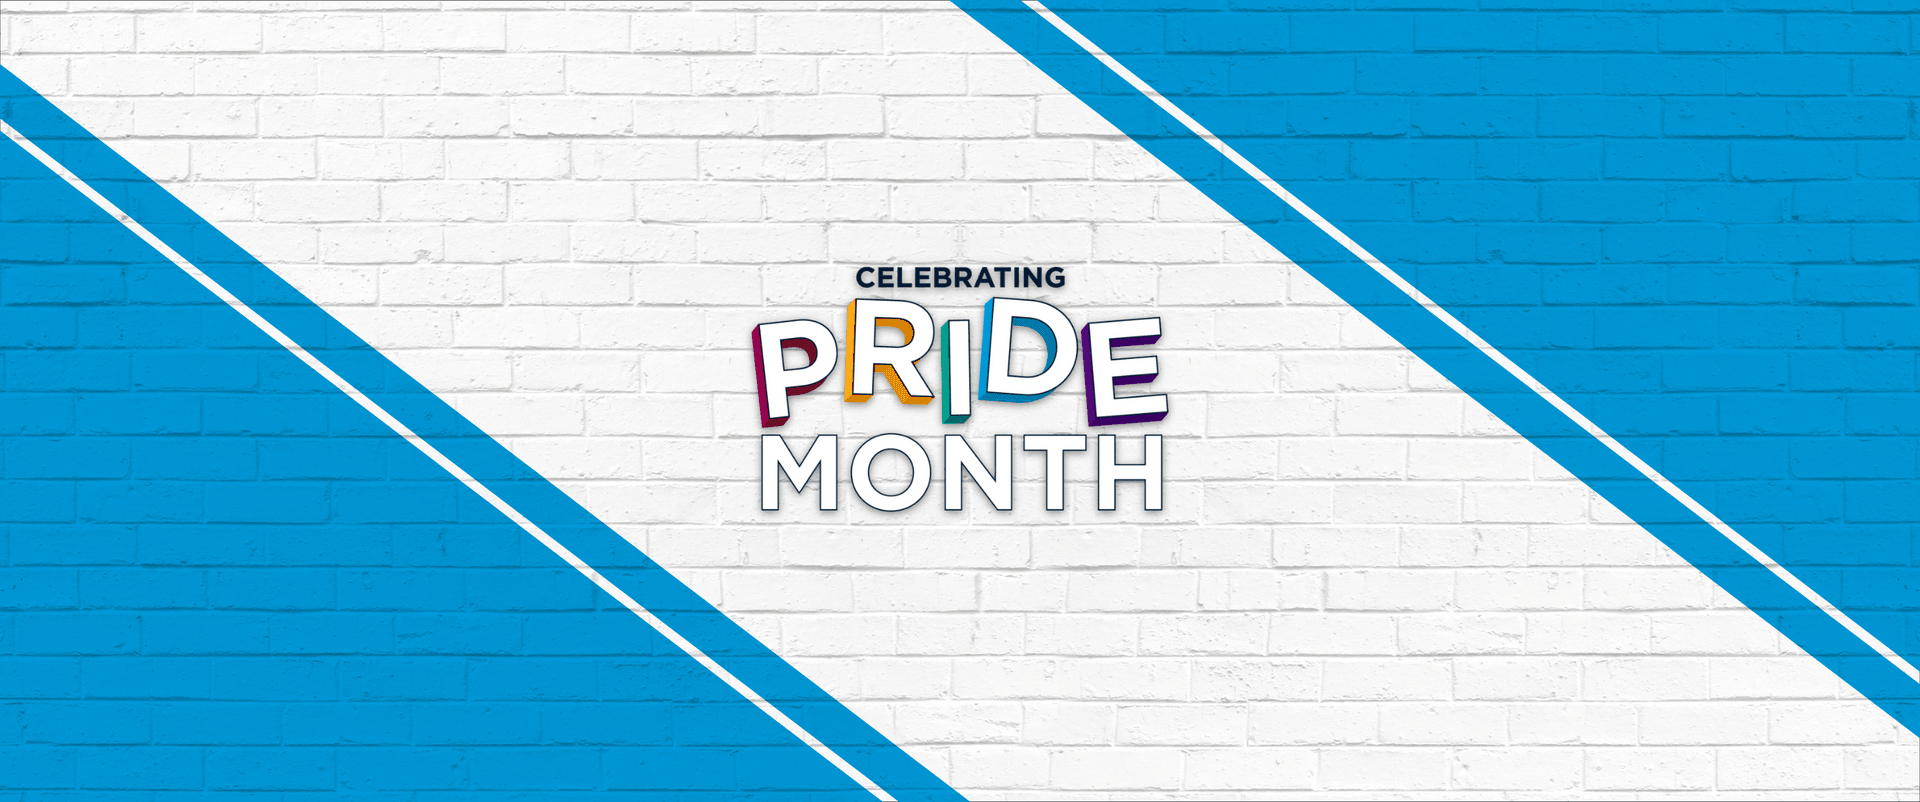 Pride month graphic